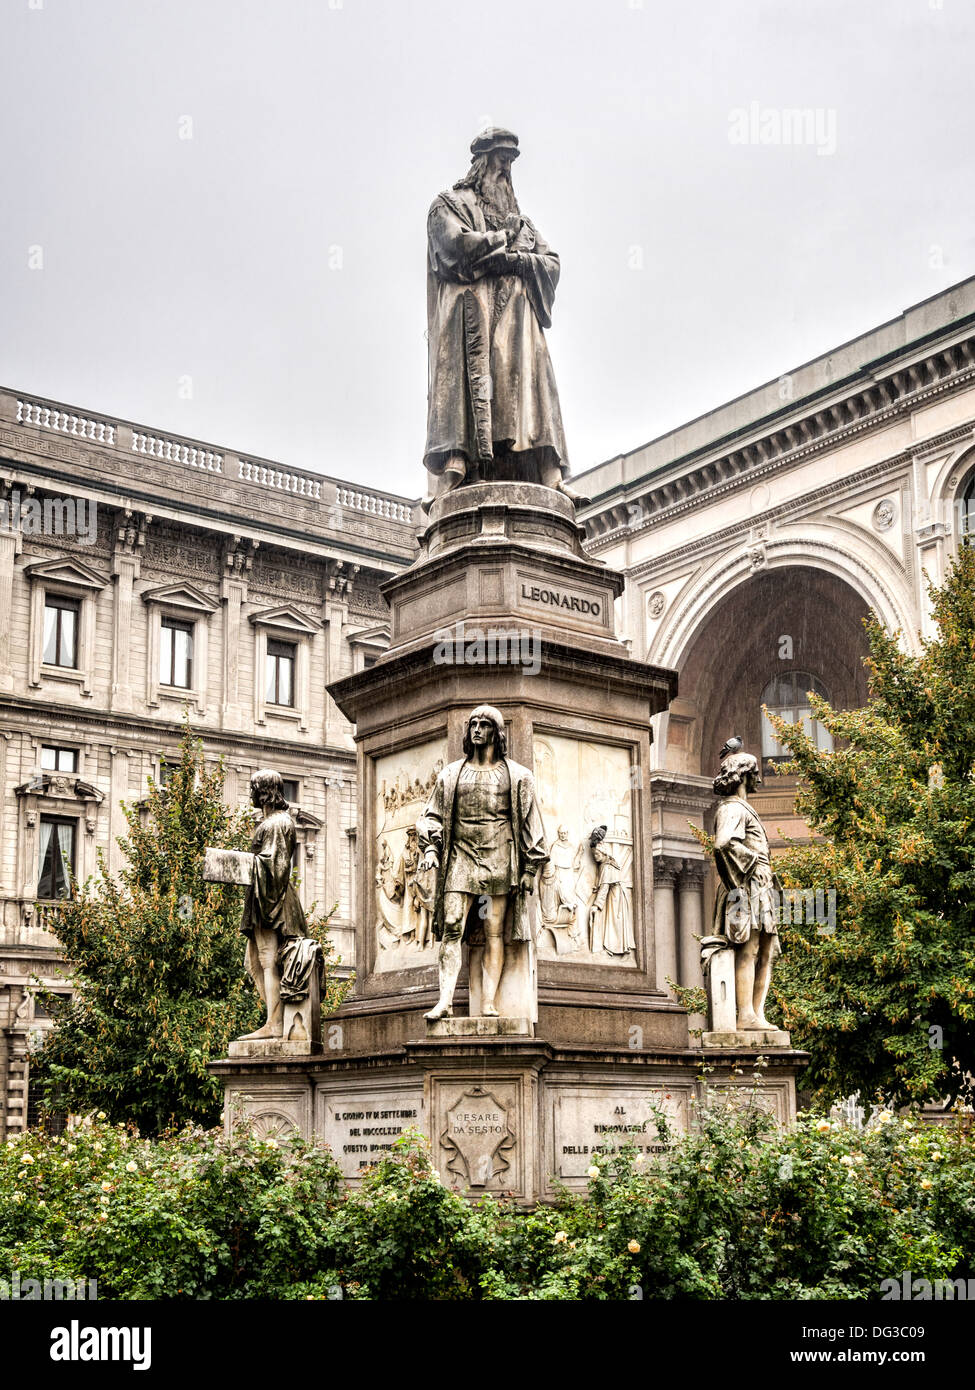 Leonardo's monument sur la Piazza della Scala, Milan, Italie Banque D'Images